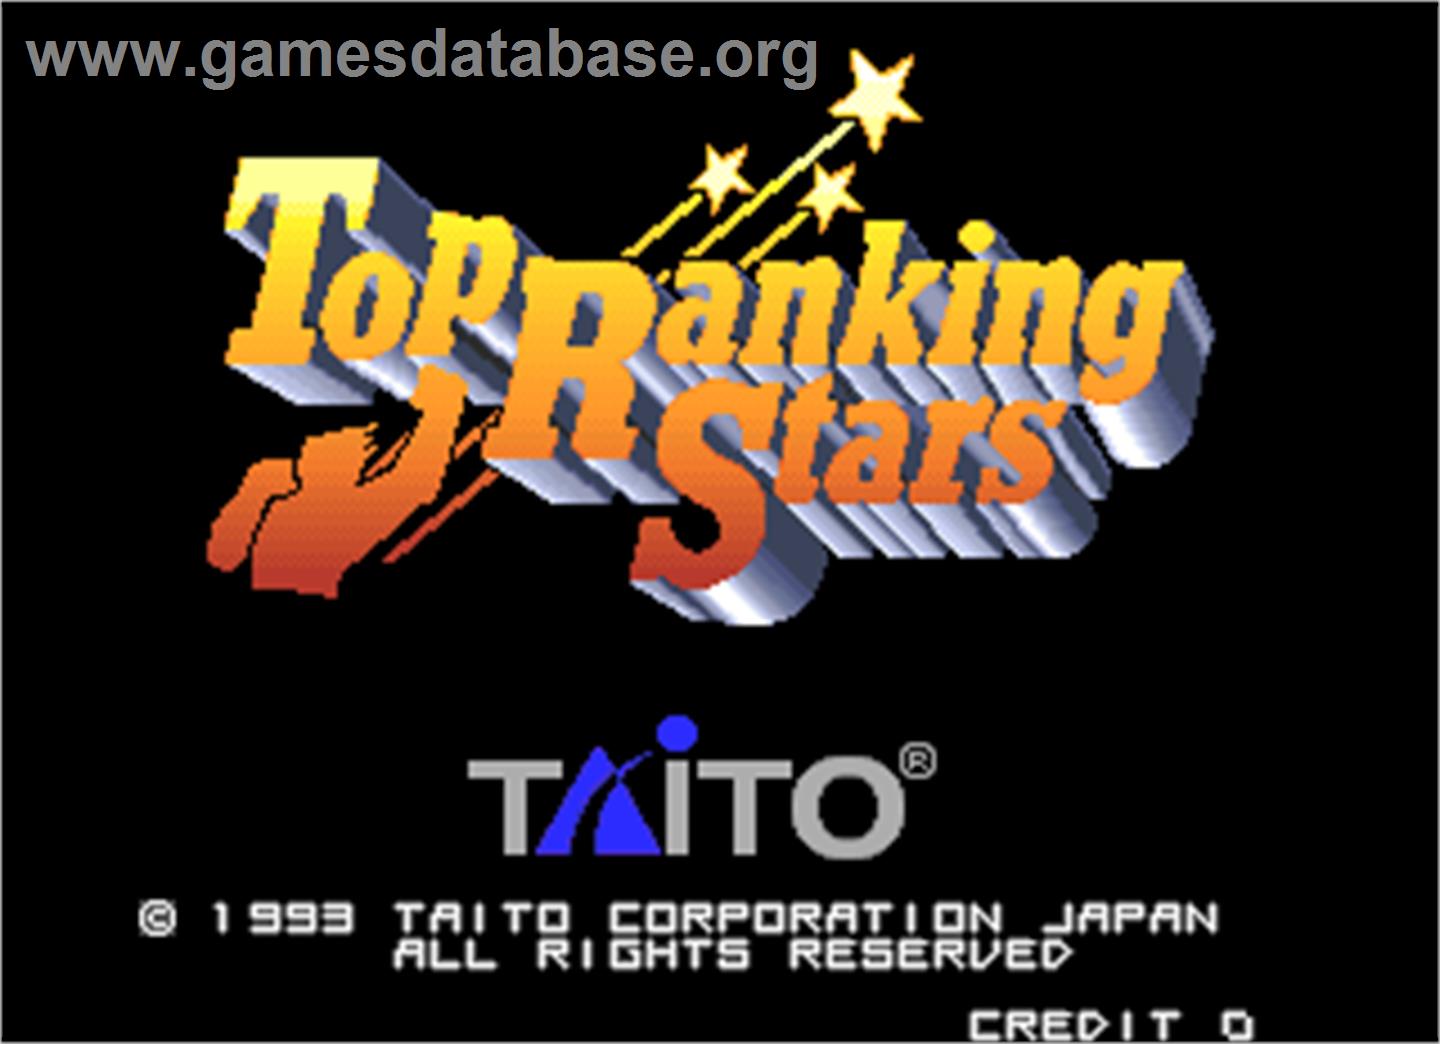 Top Ranking Stars - Arcade - Artwork - Title Screen